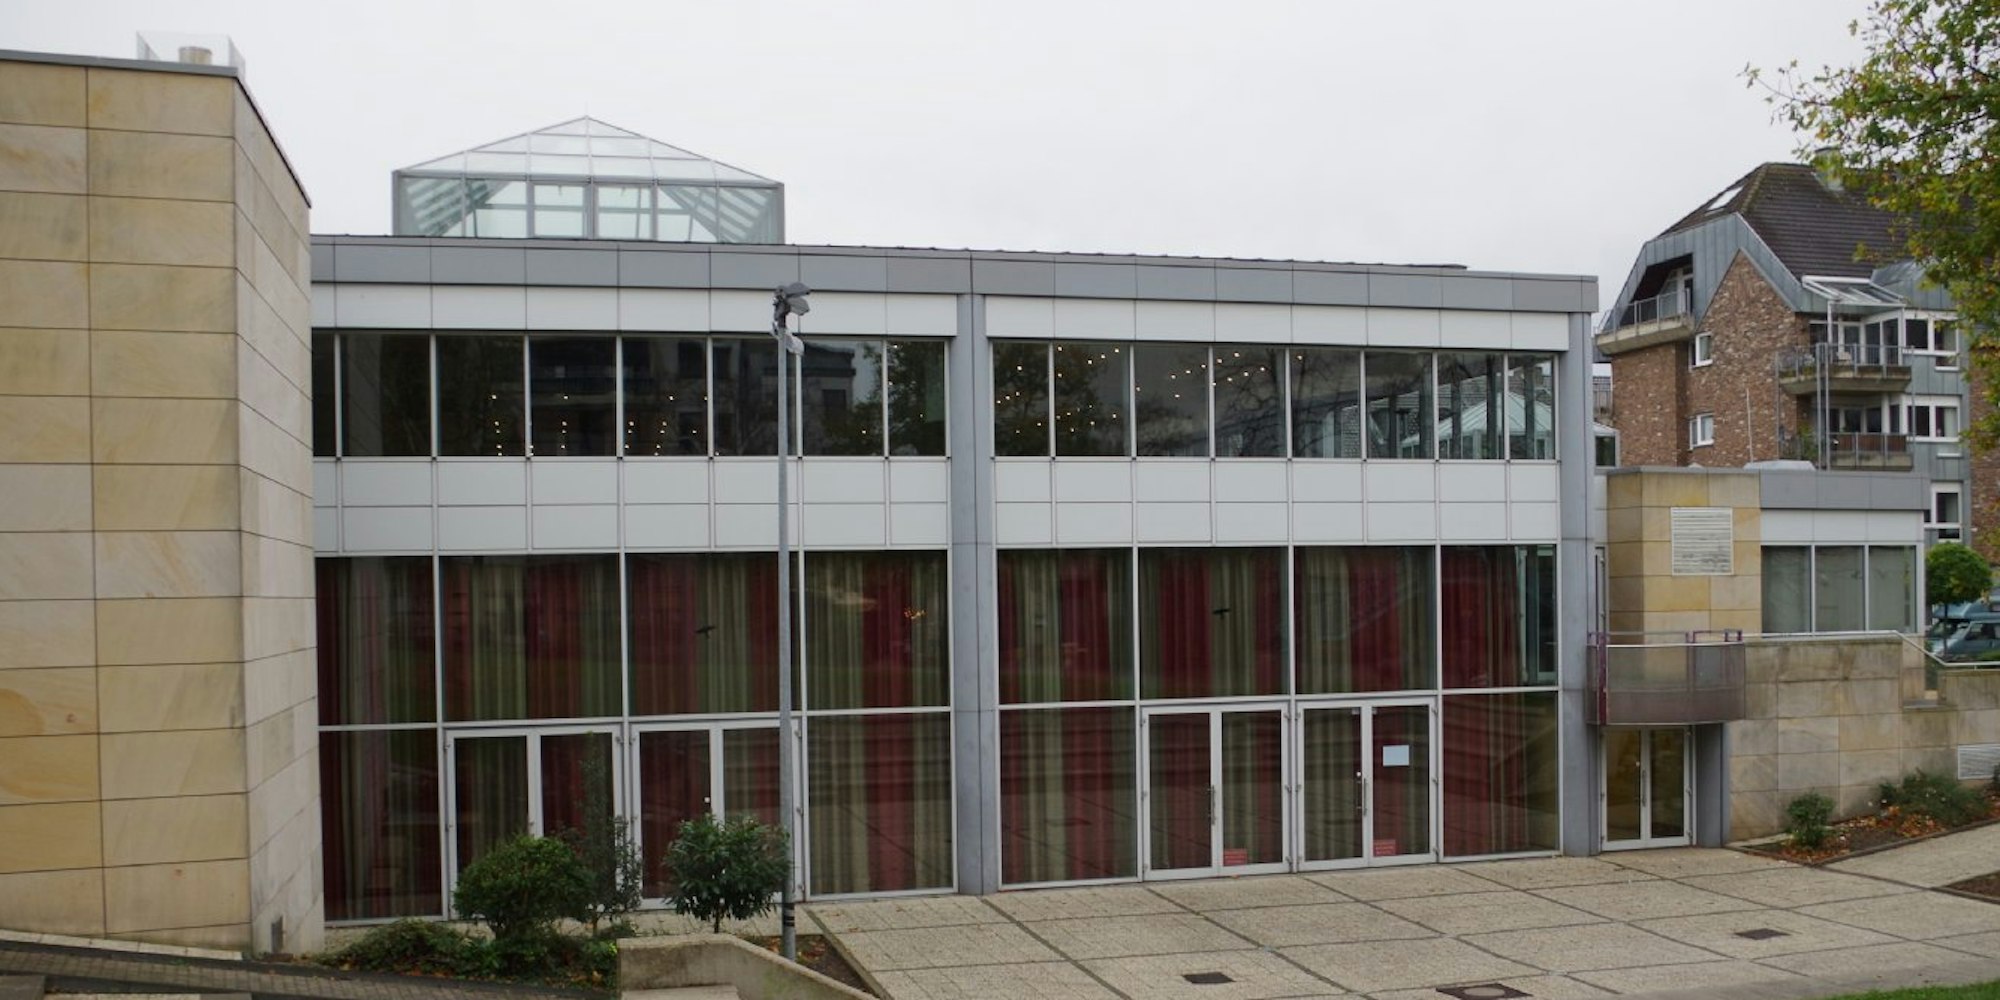 City-Forum in Euskirchne (Archivbild)